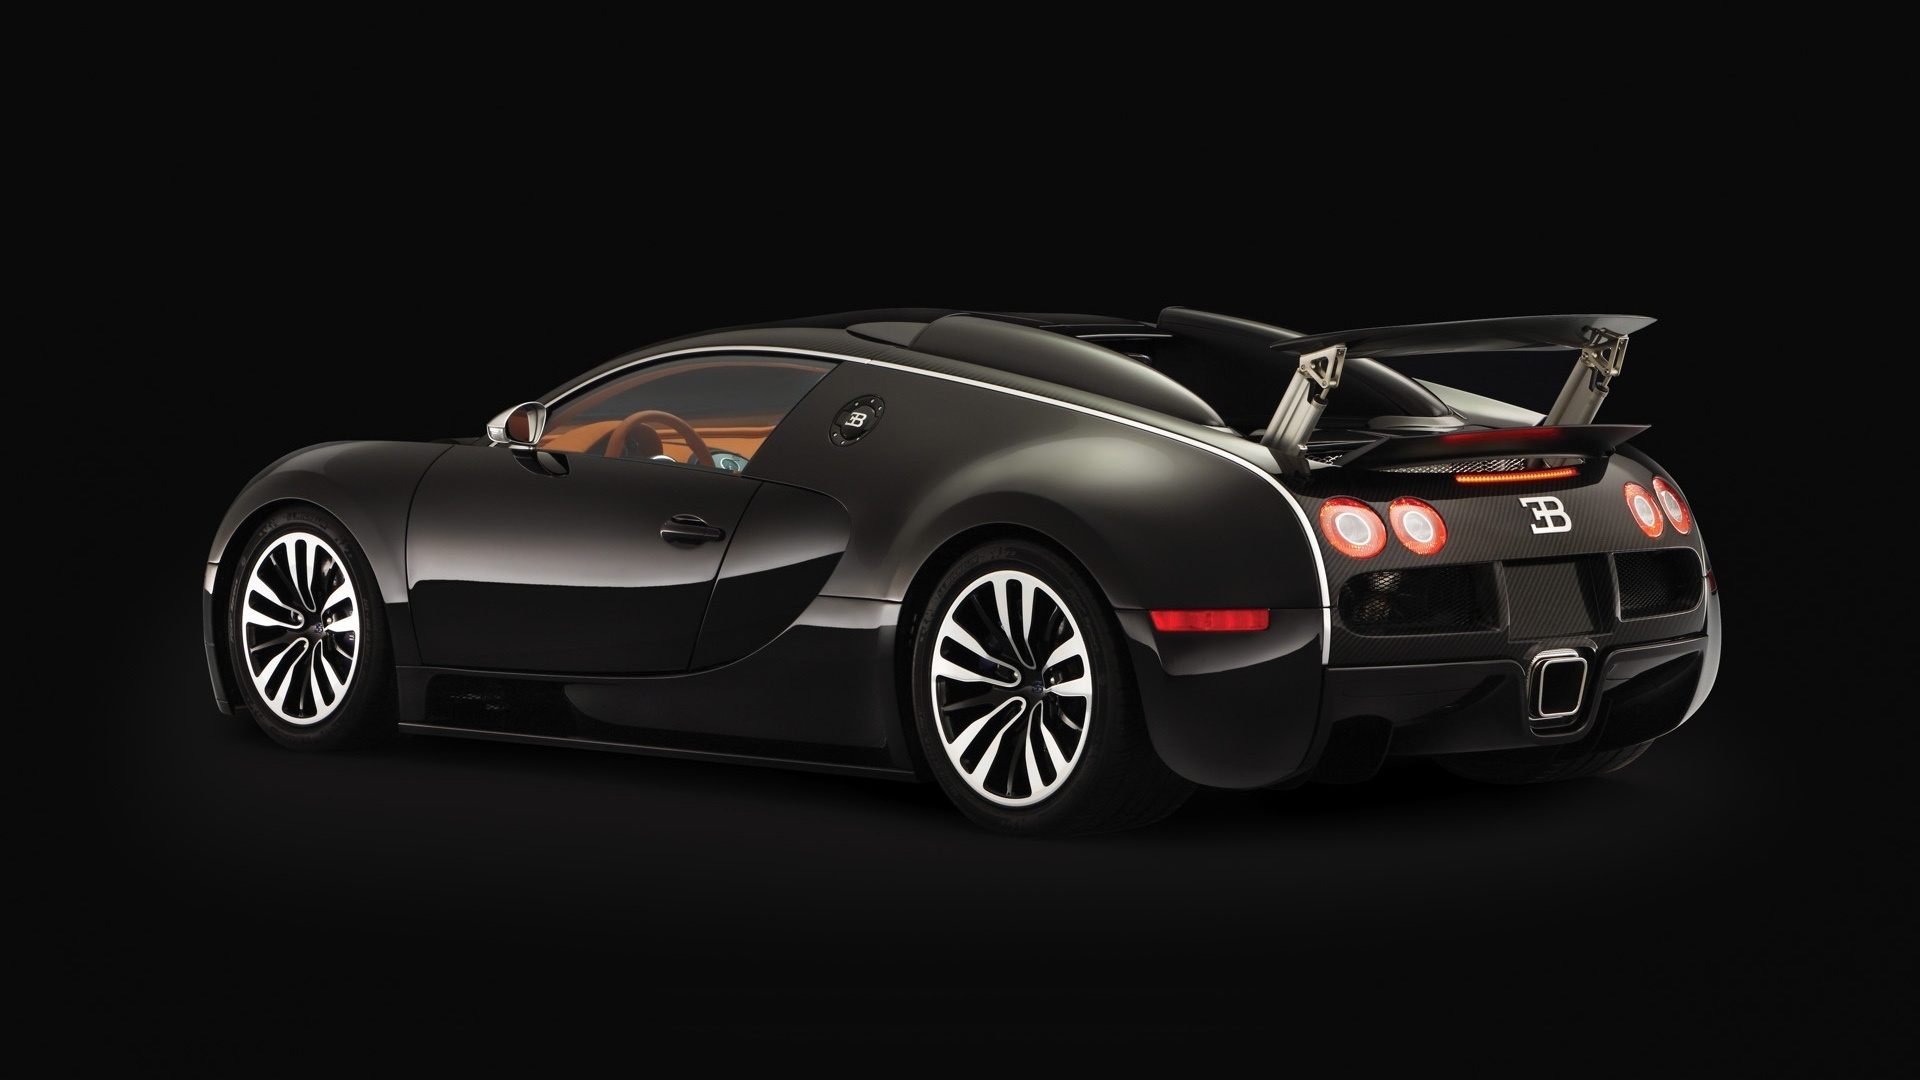 Bugatti Veyron Sang Noir 2008 - Rear Angle for 1920 x 1080 HDTV 1080p resolution